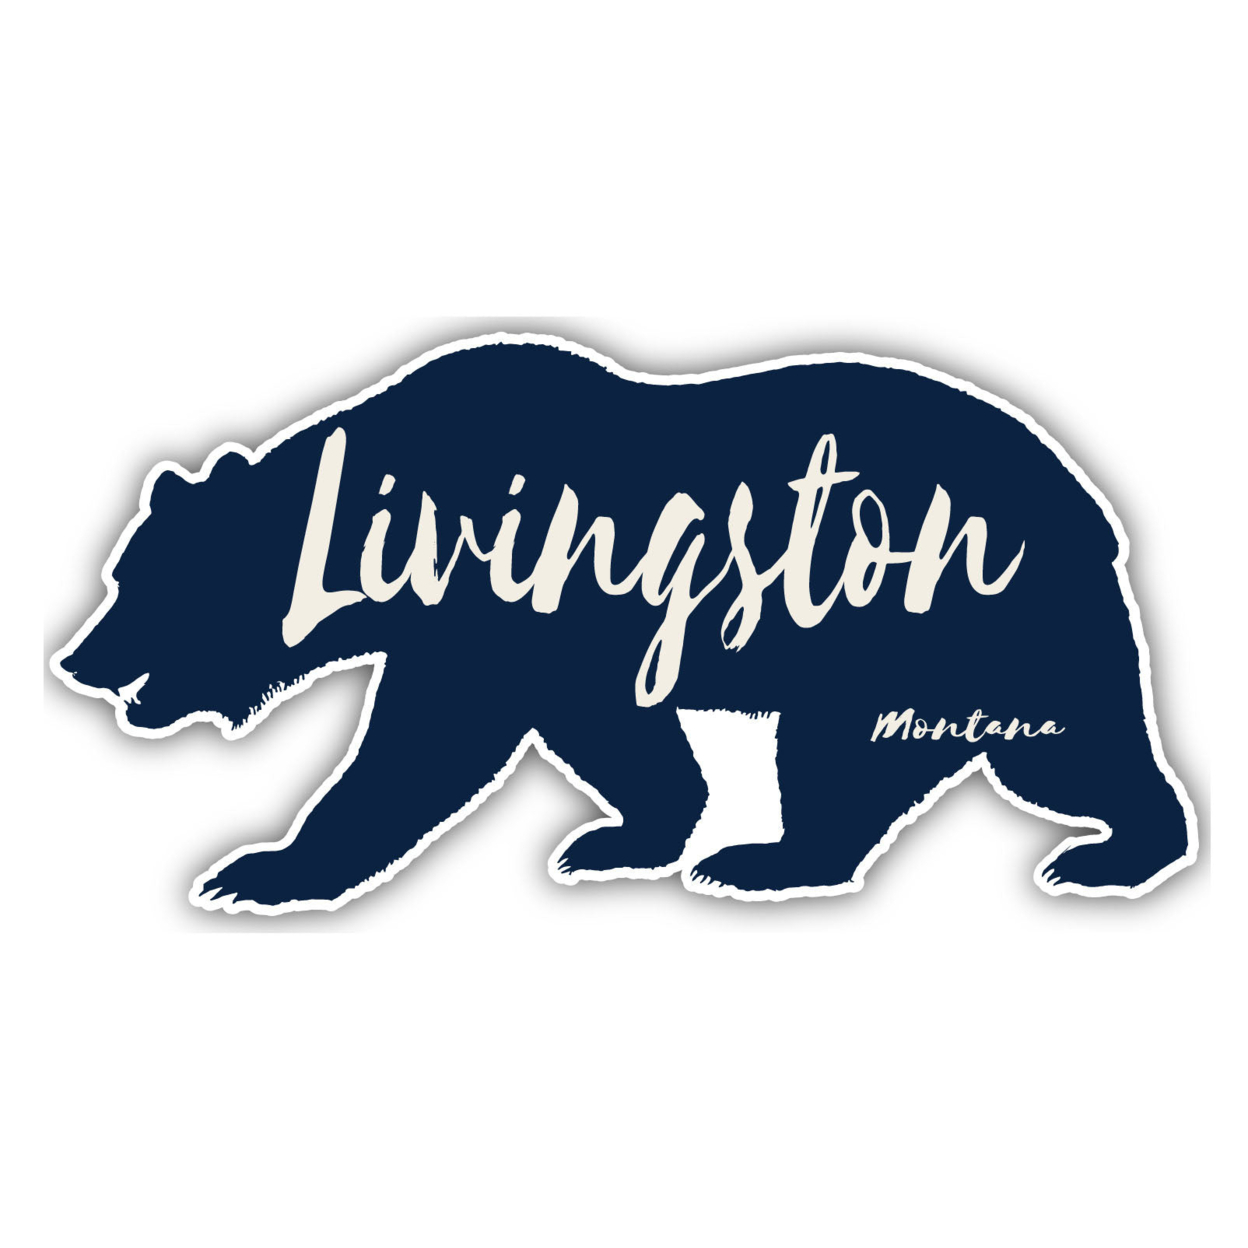 Livingston Montana Souvenir Decorative Stickers (Choose Theme And Size) - 4-Inch, Tent